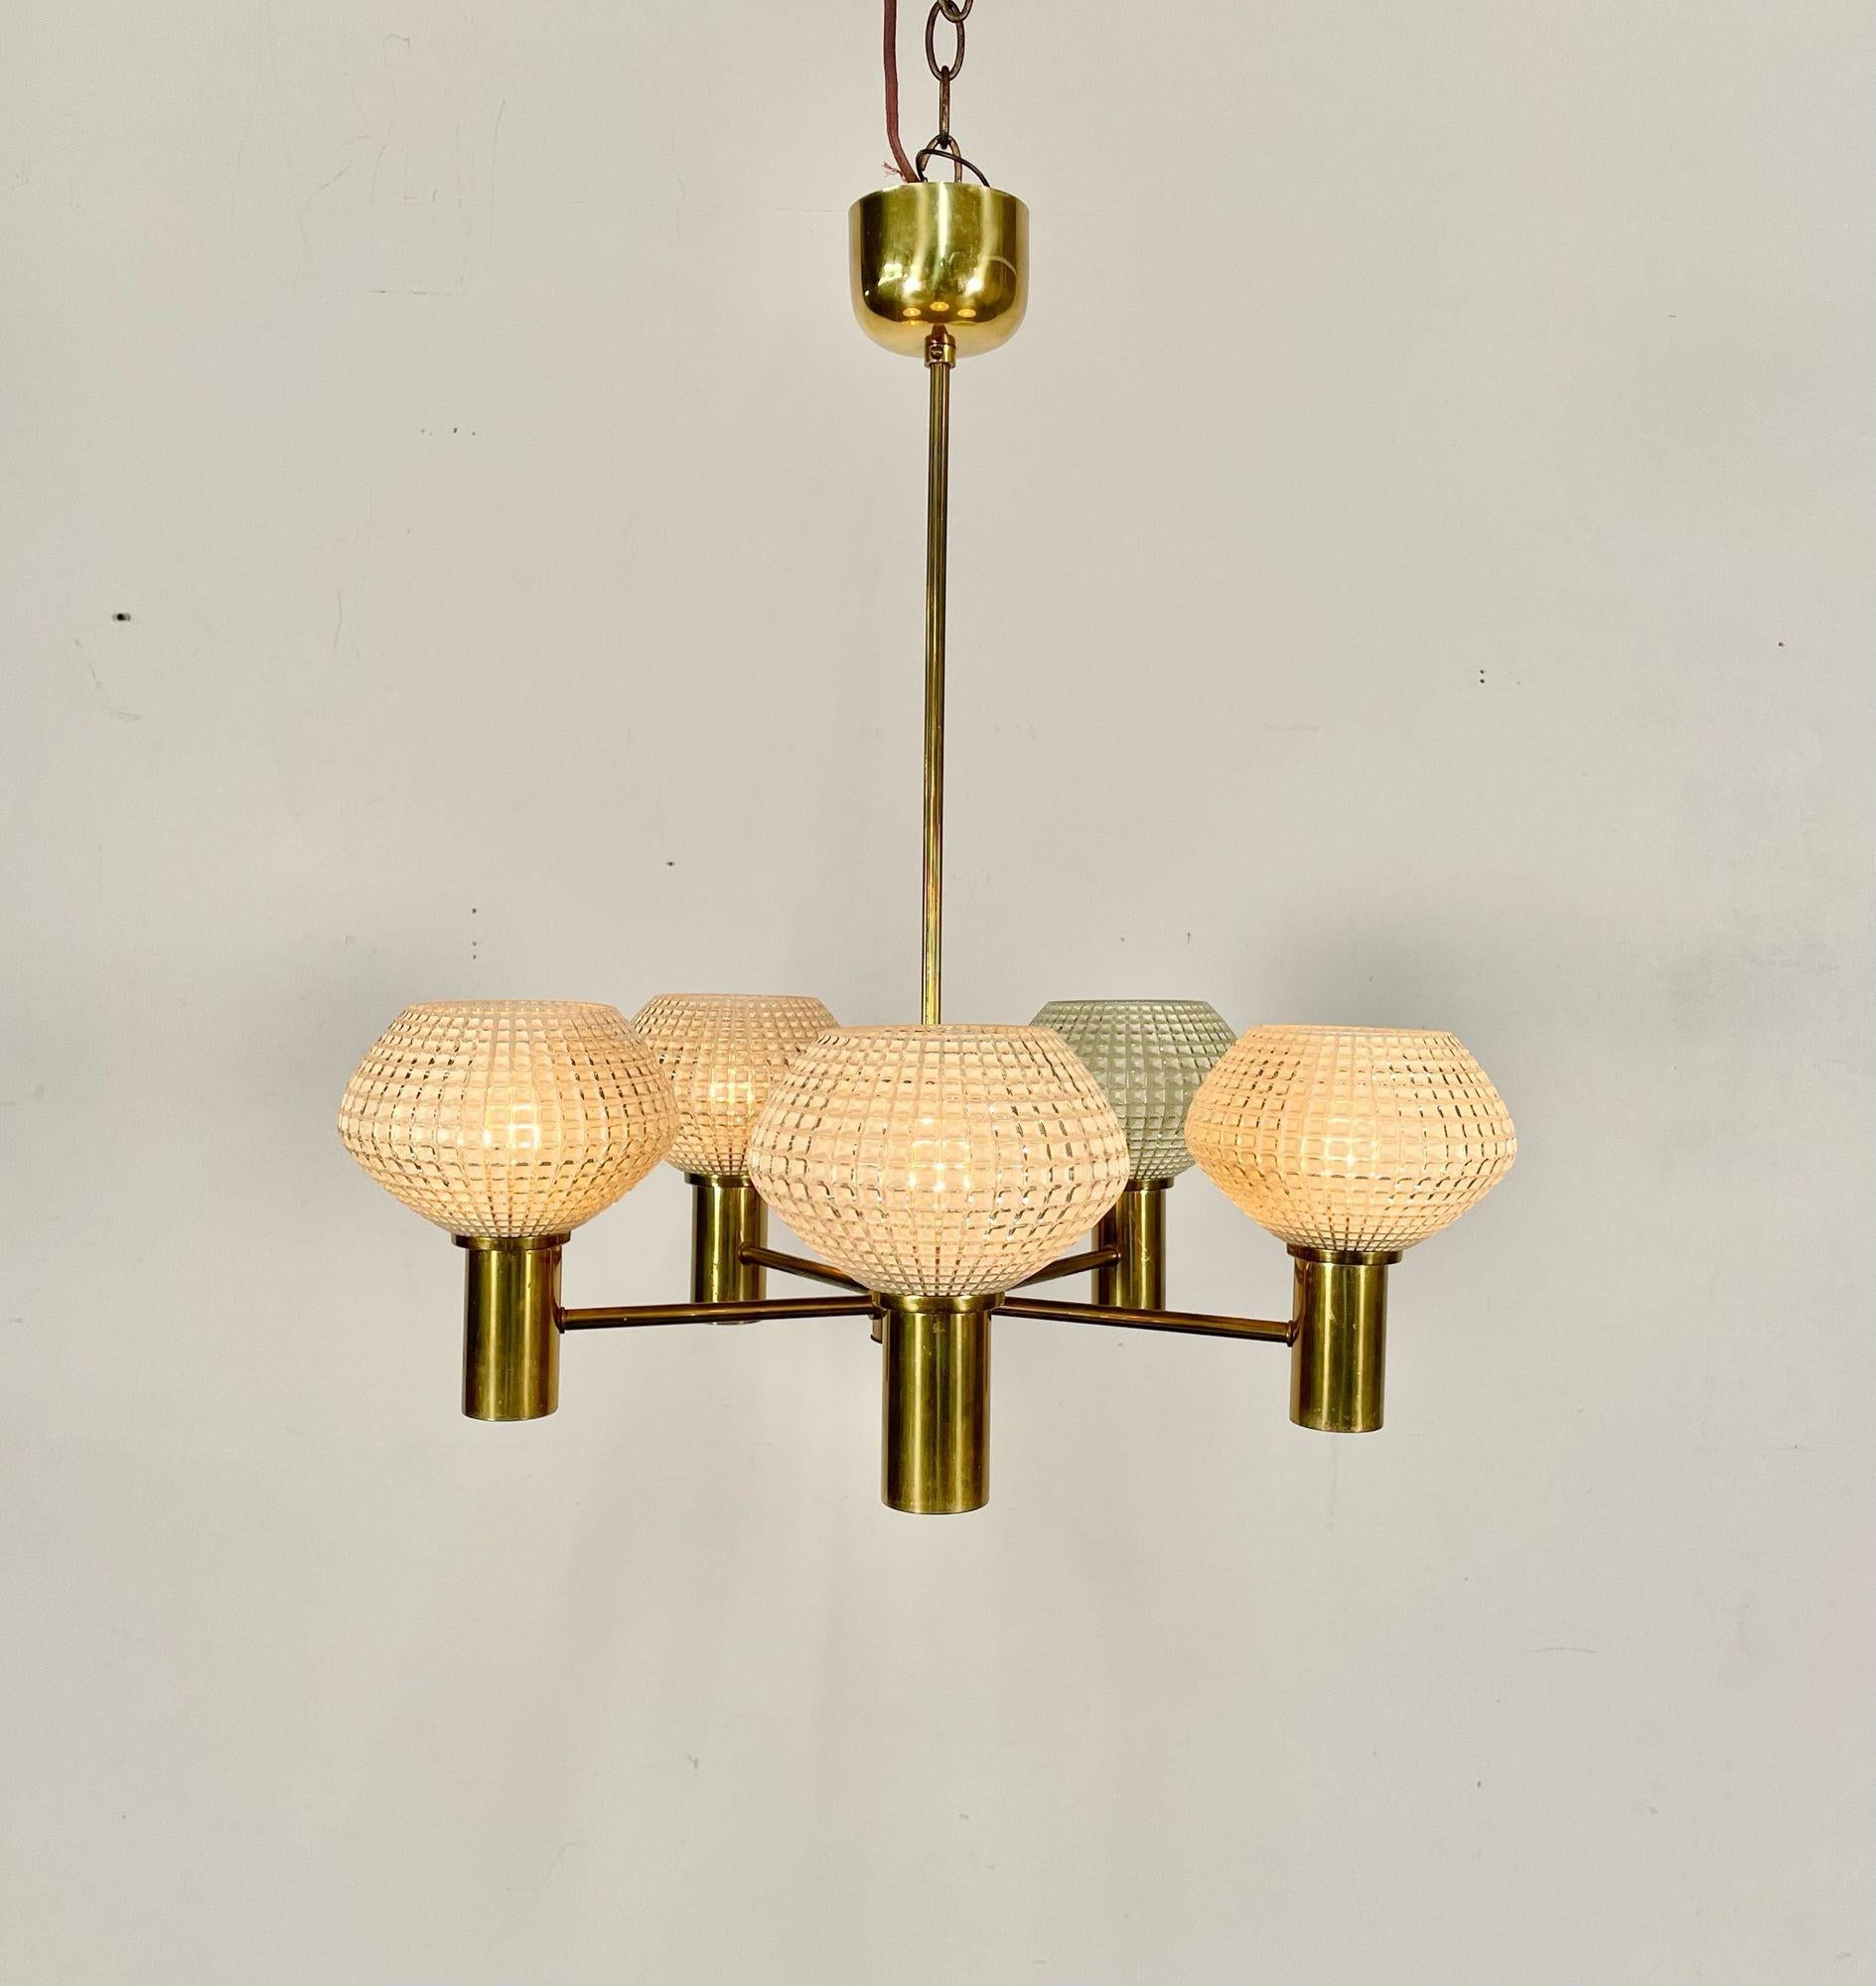 Swedish Mid-Century Modern Chandelier, Five Light, Brass and Textured Glass

Brass, Textured Glass
Sweden, 1960s

23.25h x 22 dia